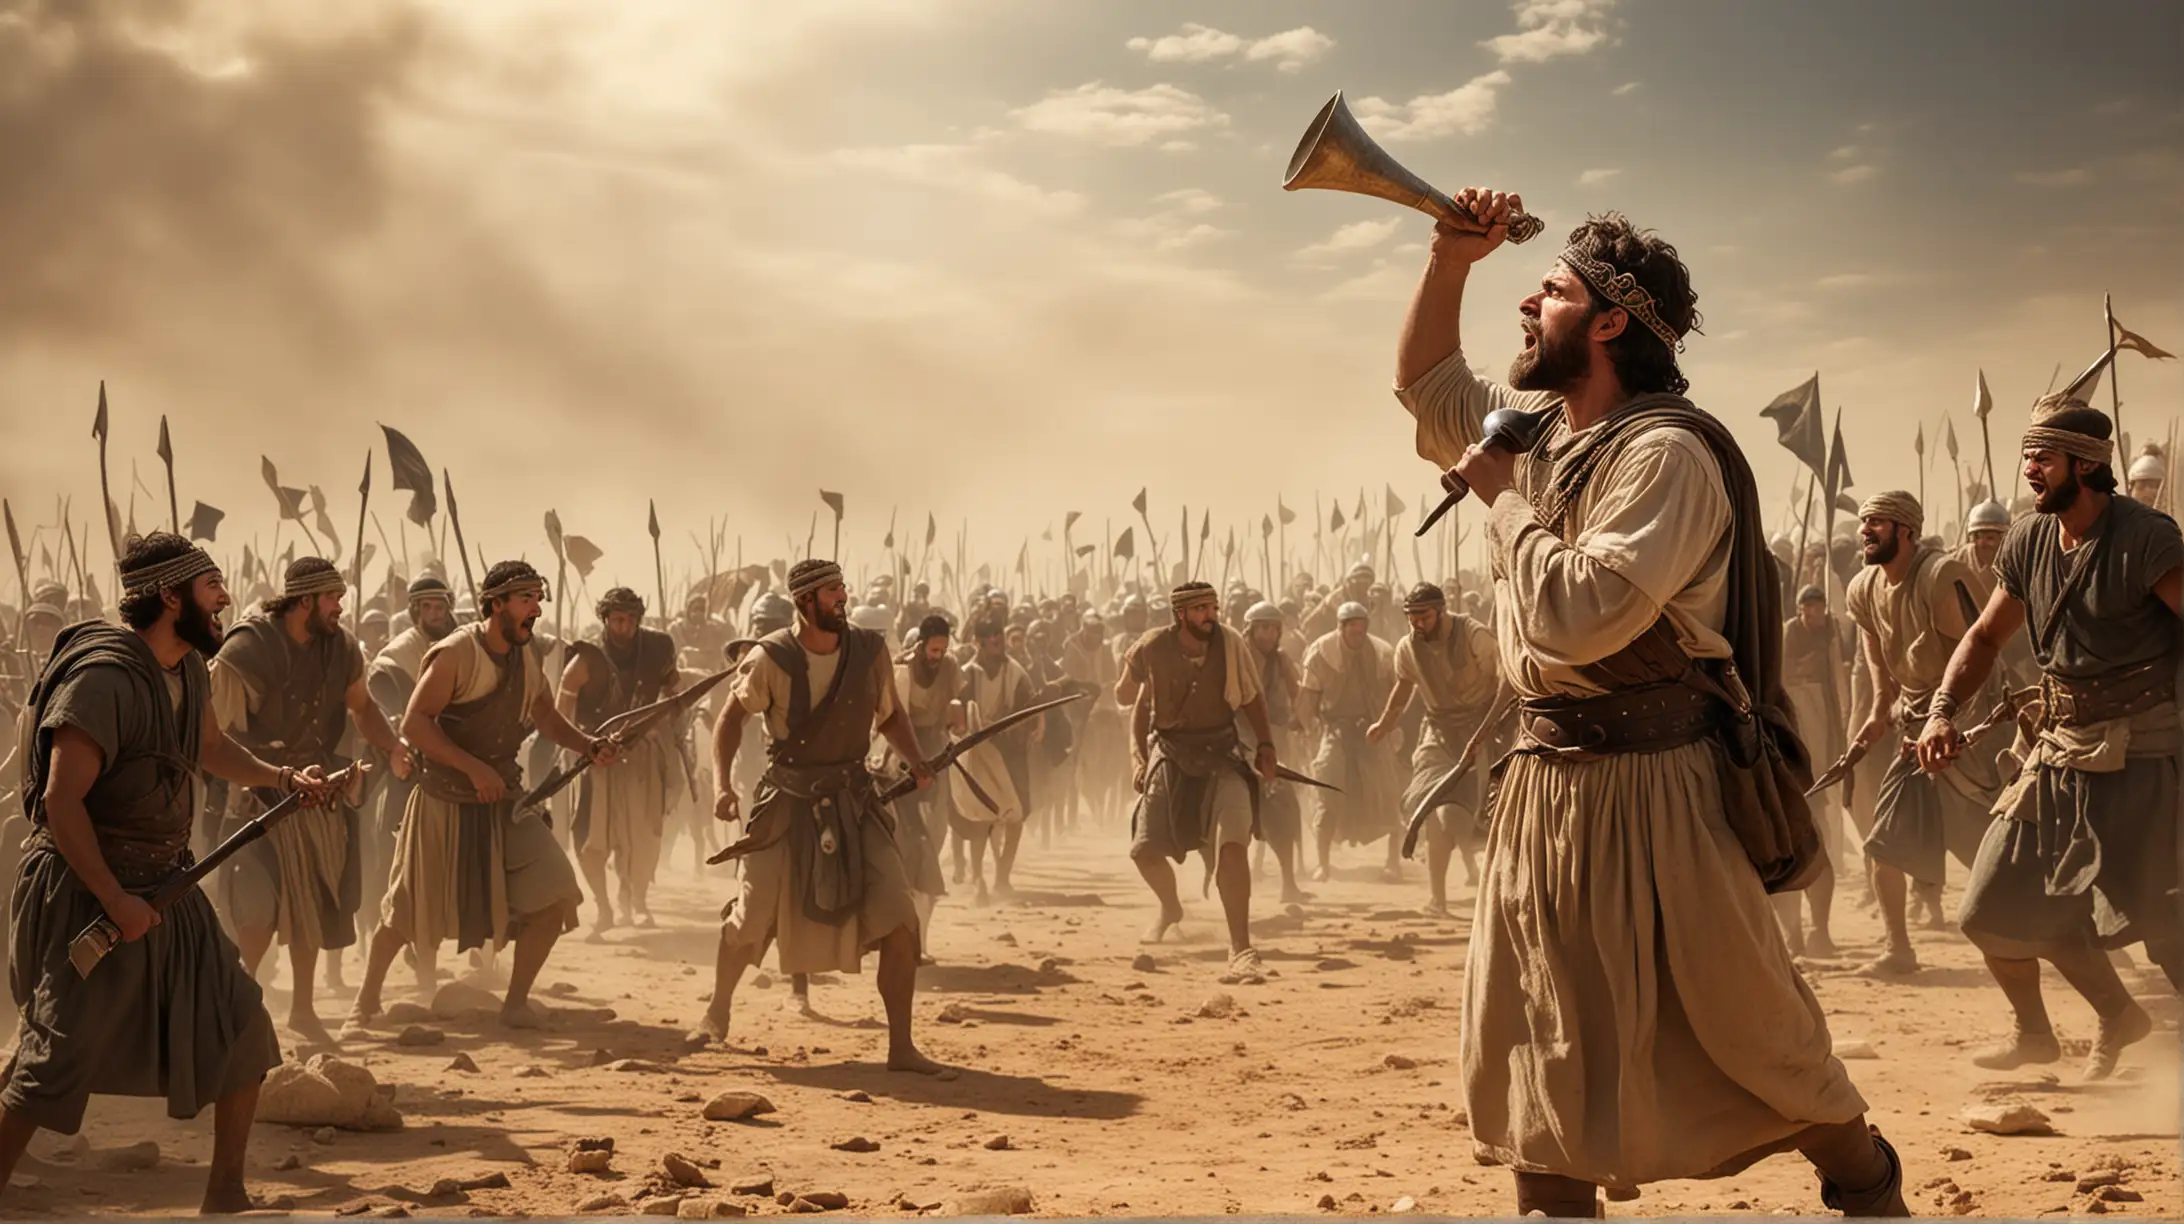 Biblical Joshua Era Battle Scene Horn Blower Signals Men to Attack